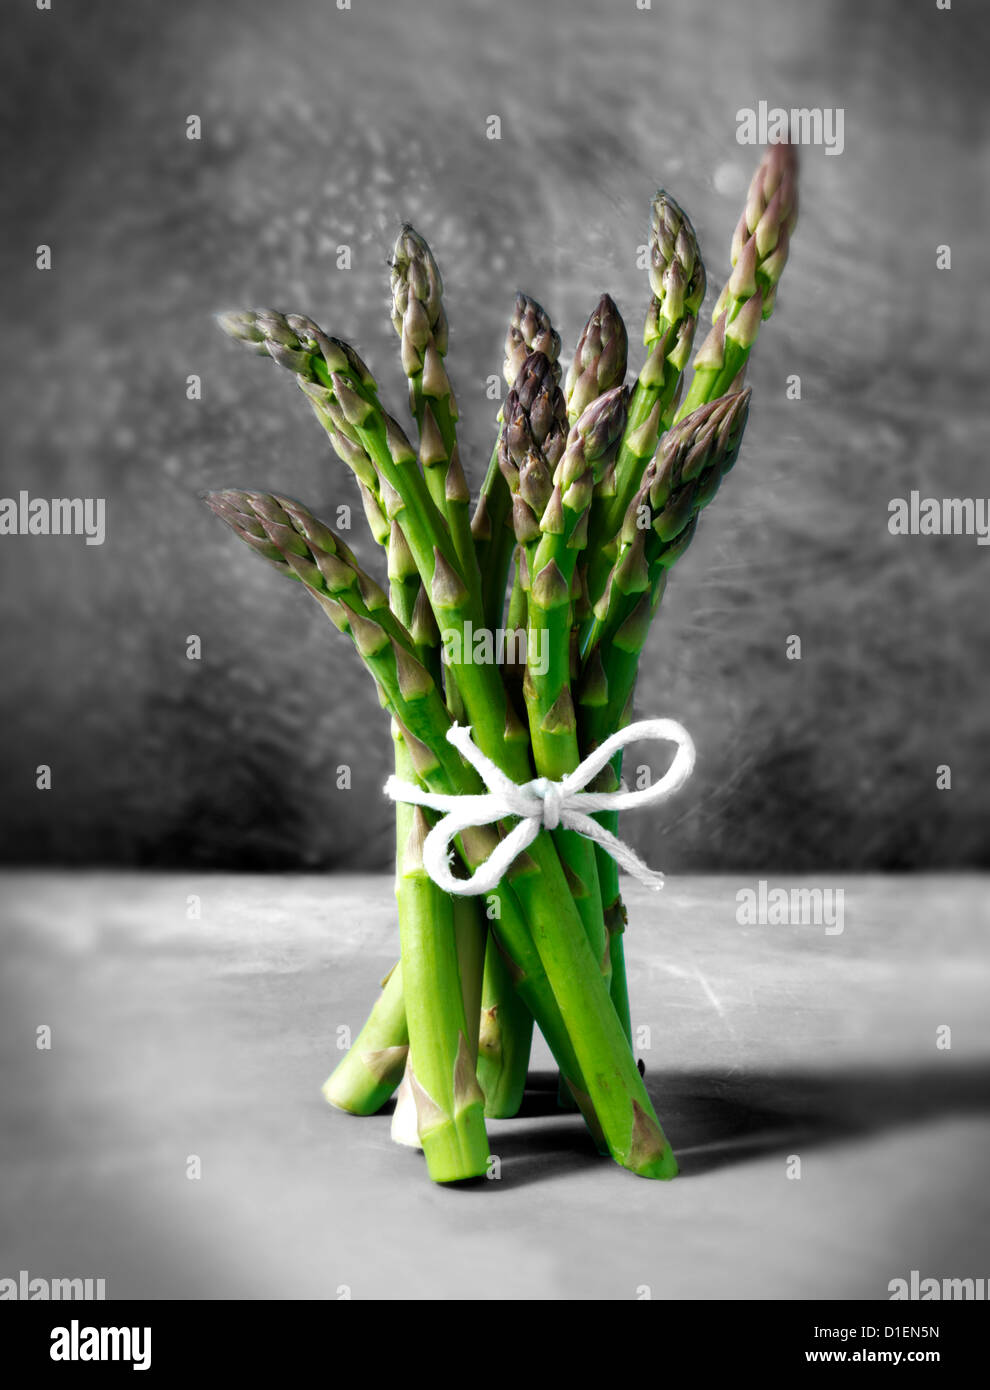 bunch of fresh asparagus spears. Stock Photo